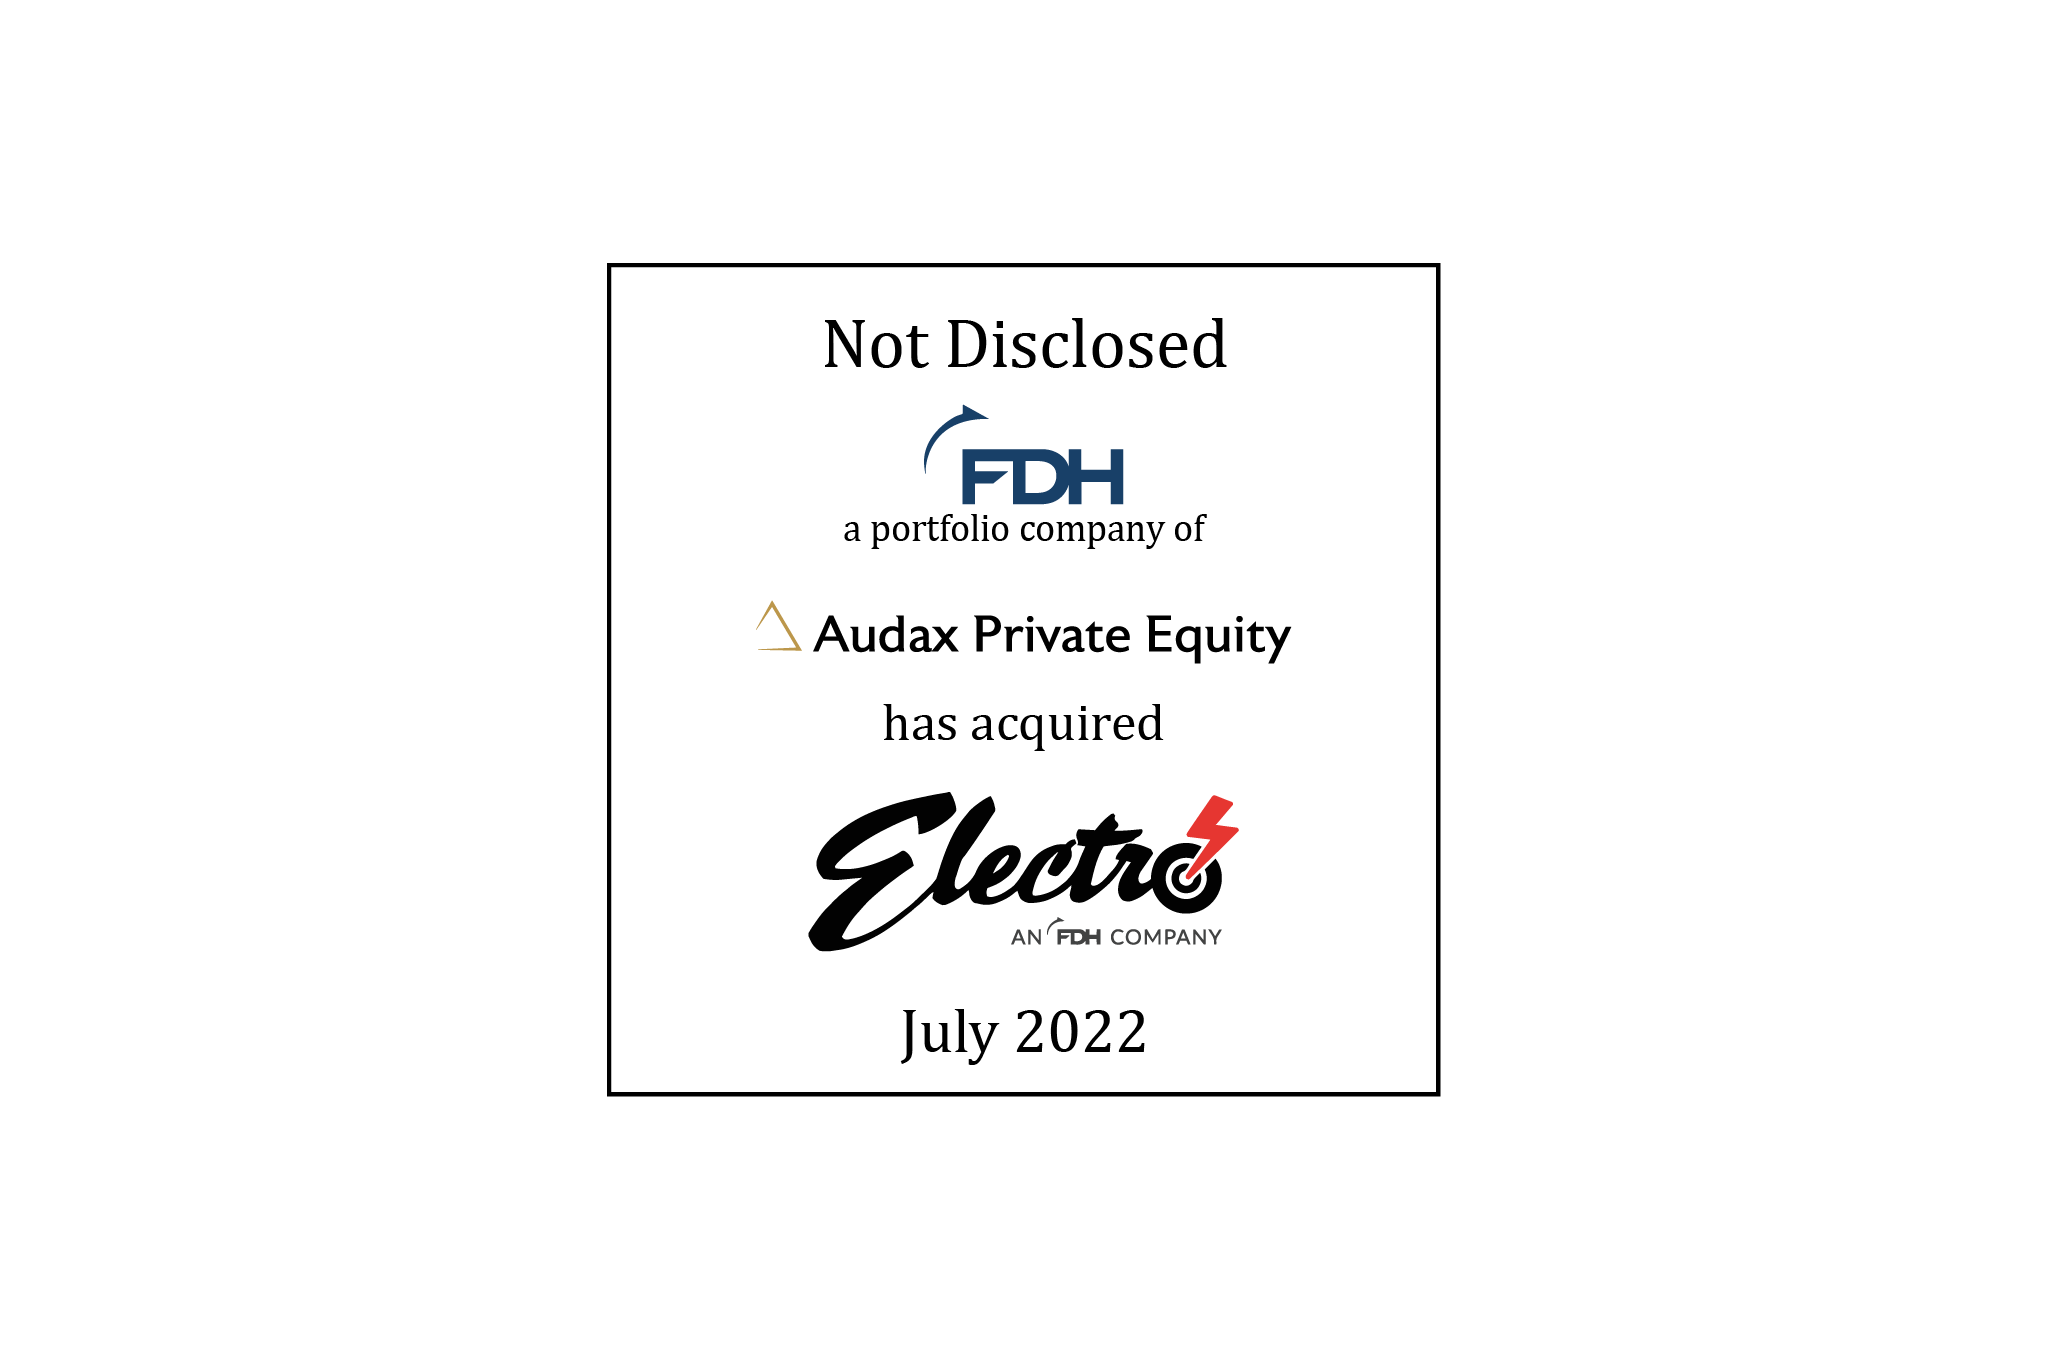 Not Disclosed | FDH Aero (logo), a portfolio company of Audax Private Equity (logo),  has acquired Electro Enterprises (logo) | July 2022